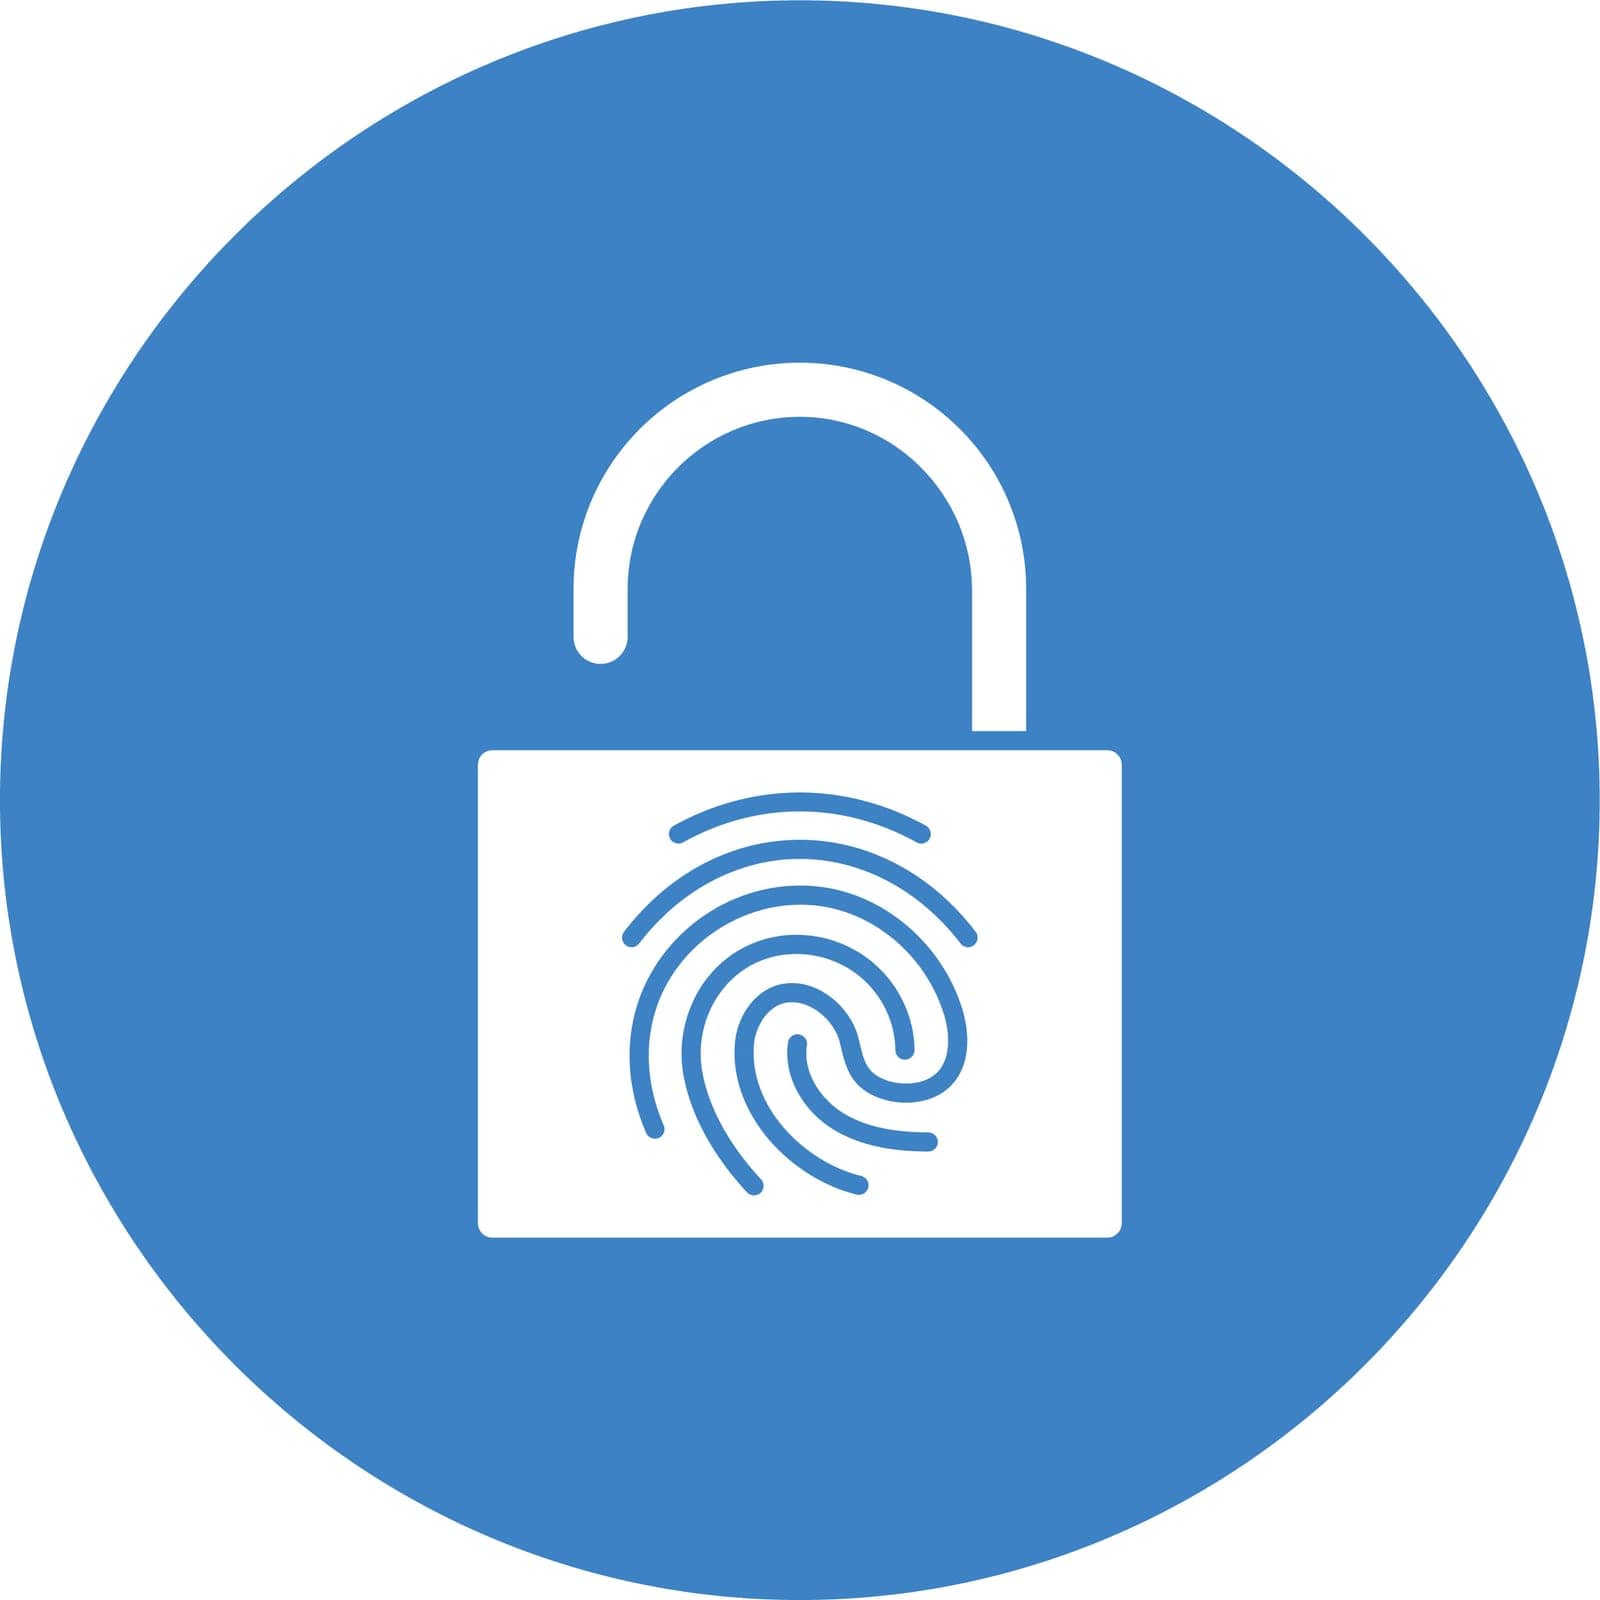 Fingerprint Lock icon vector image. by ICONBUNNY